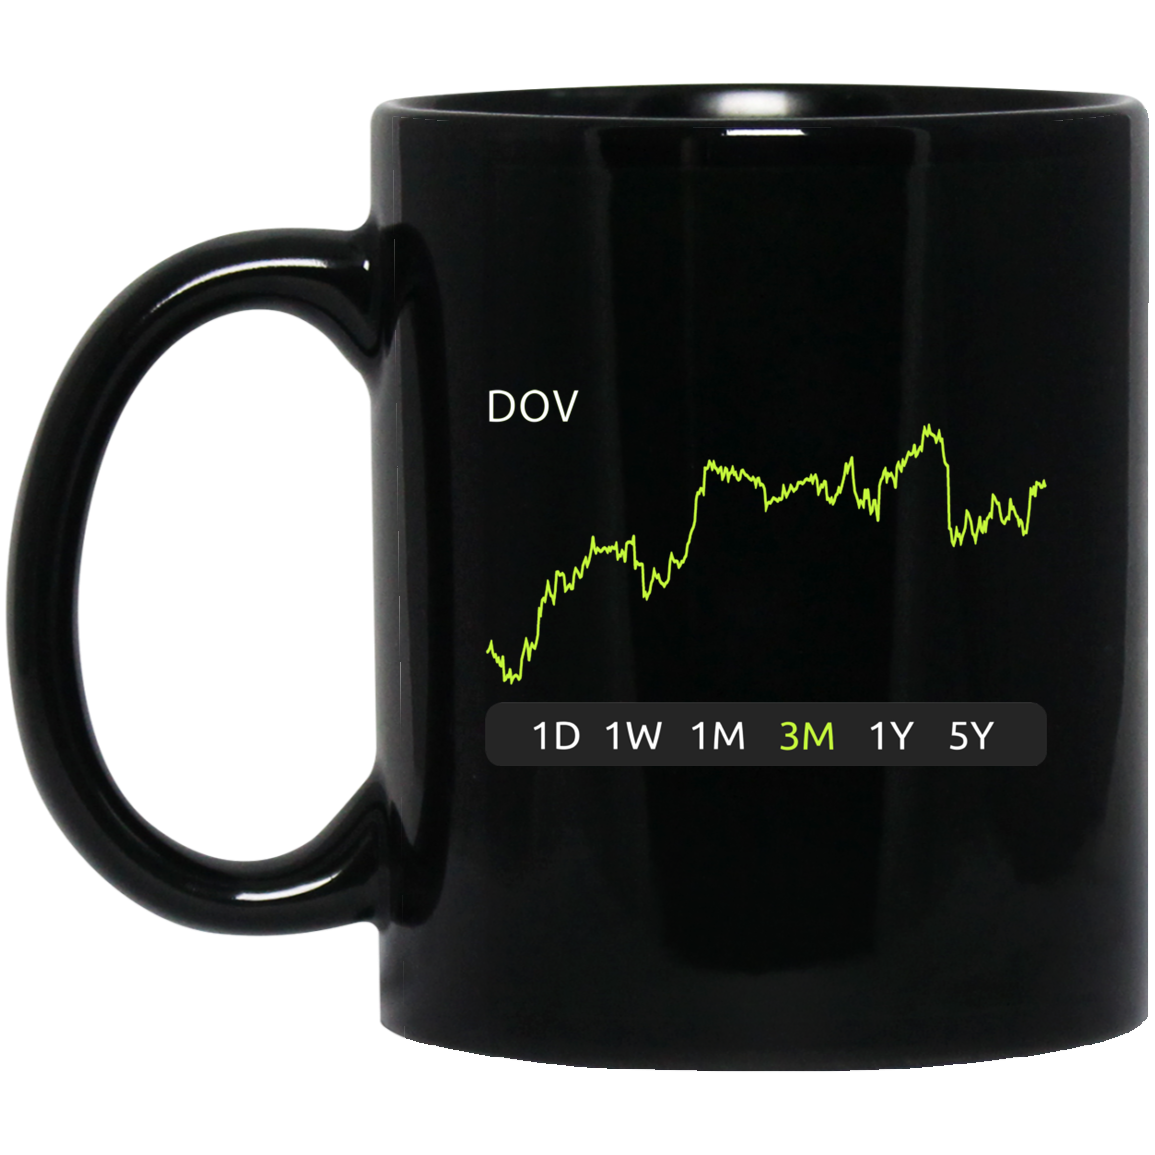 DOV Stock 3m Mug